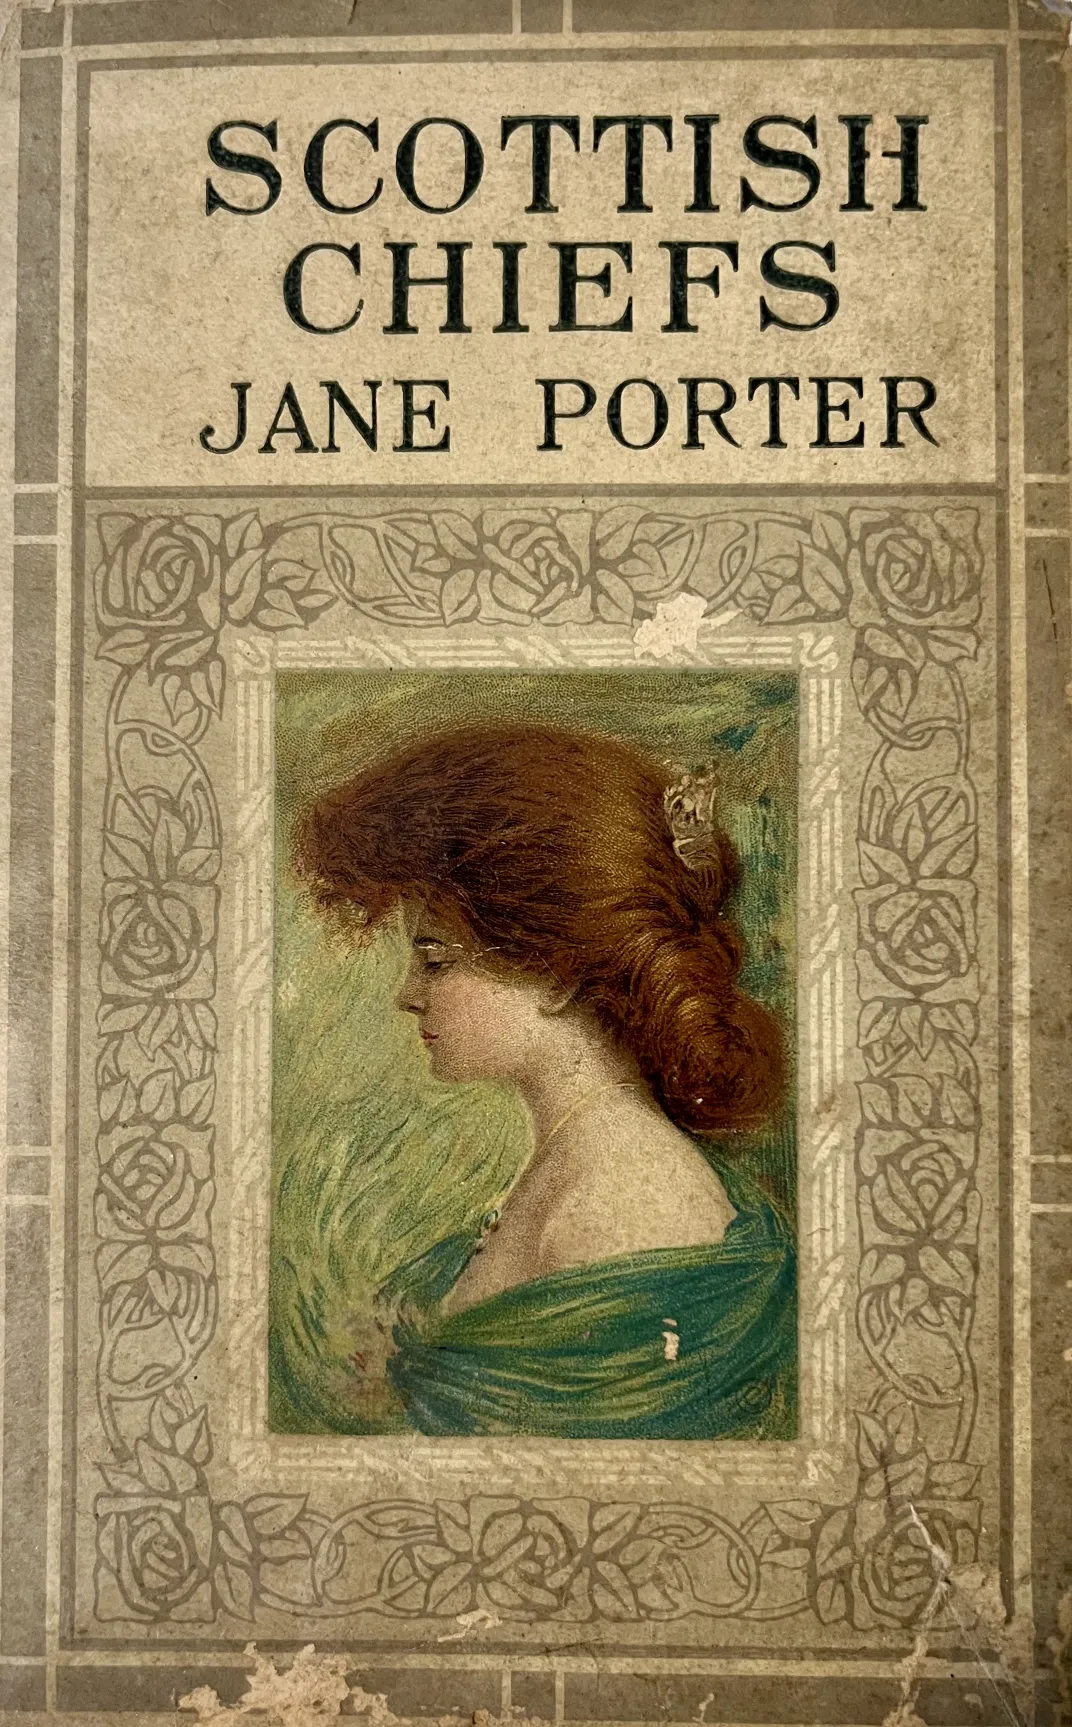 Jane Porter, The Scottish Chiefs, New York: Hurst & Co., circa 1890